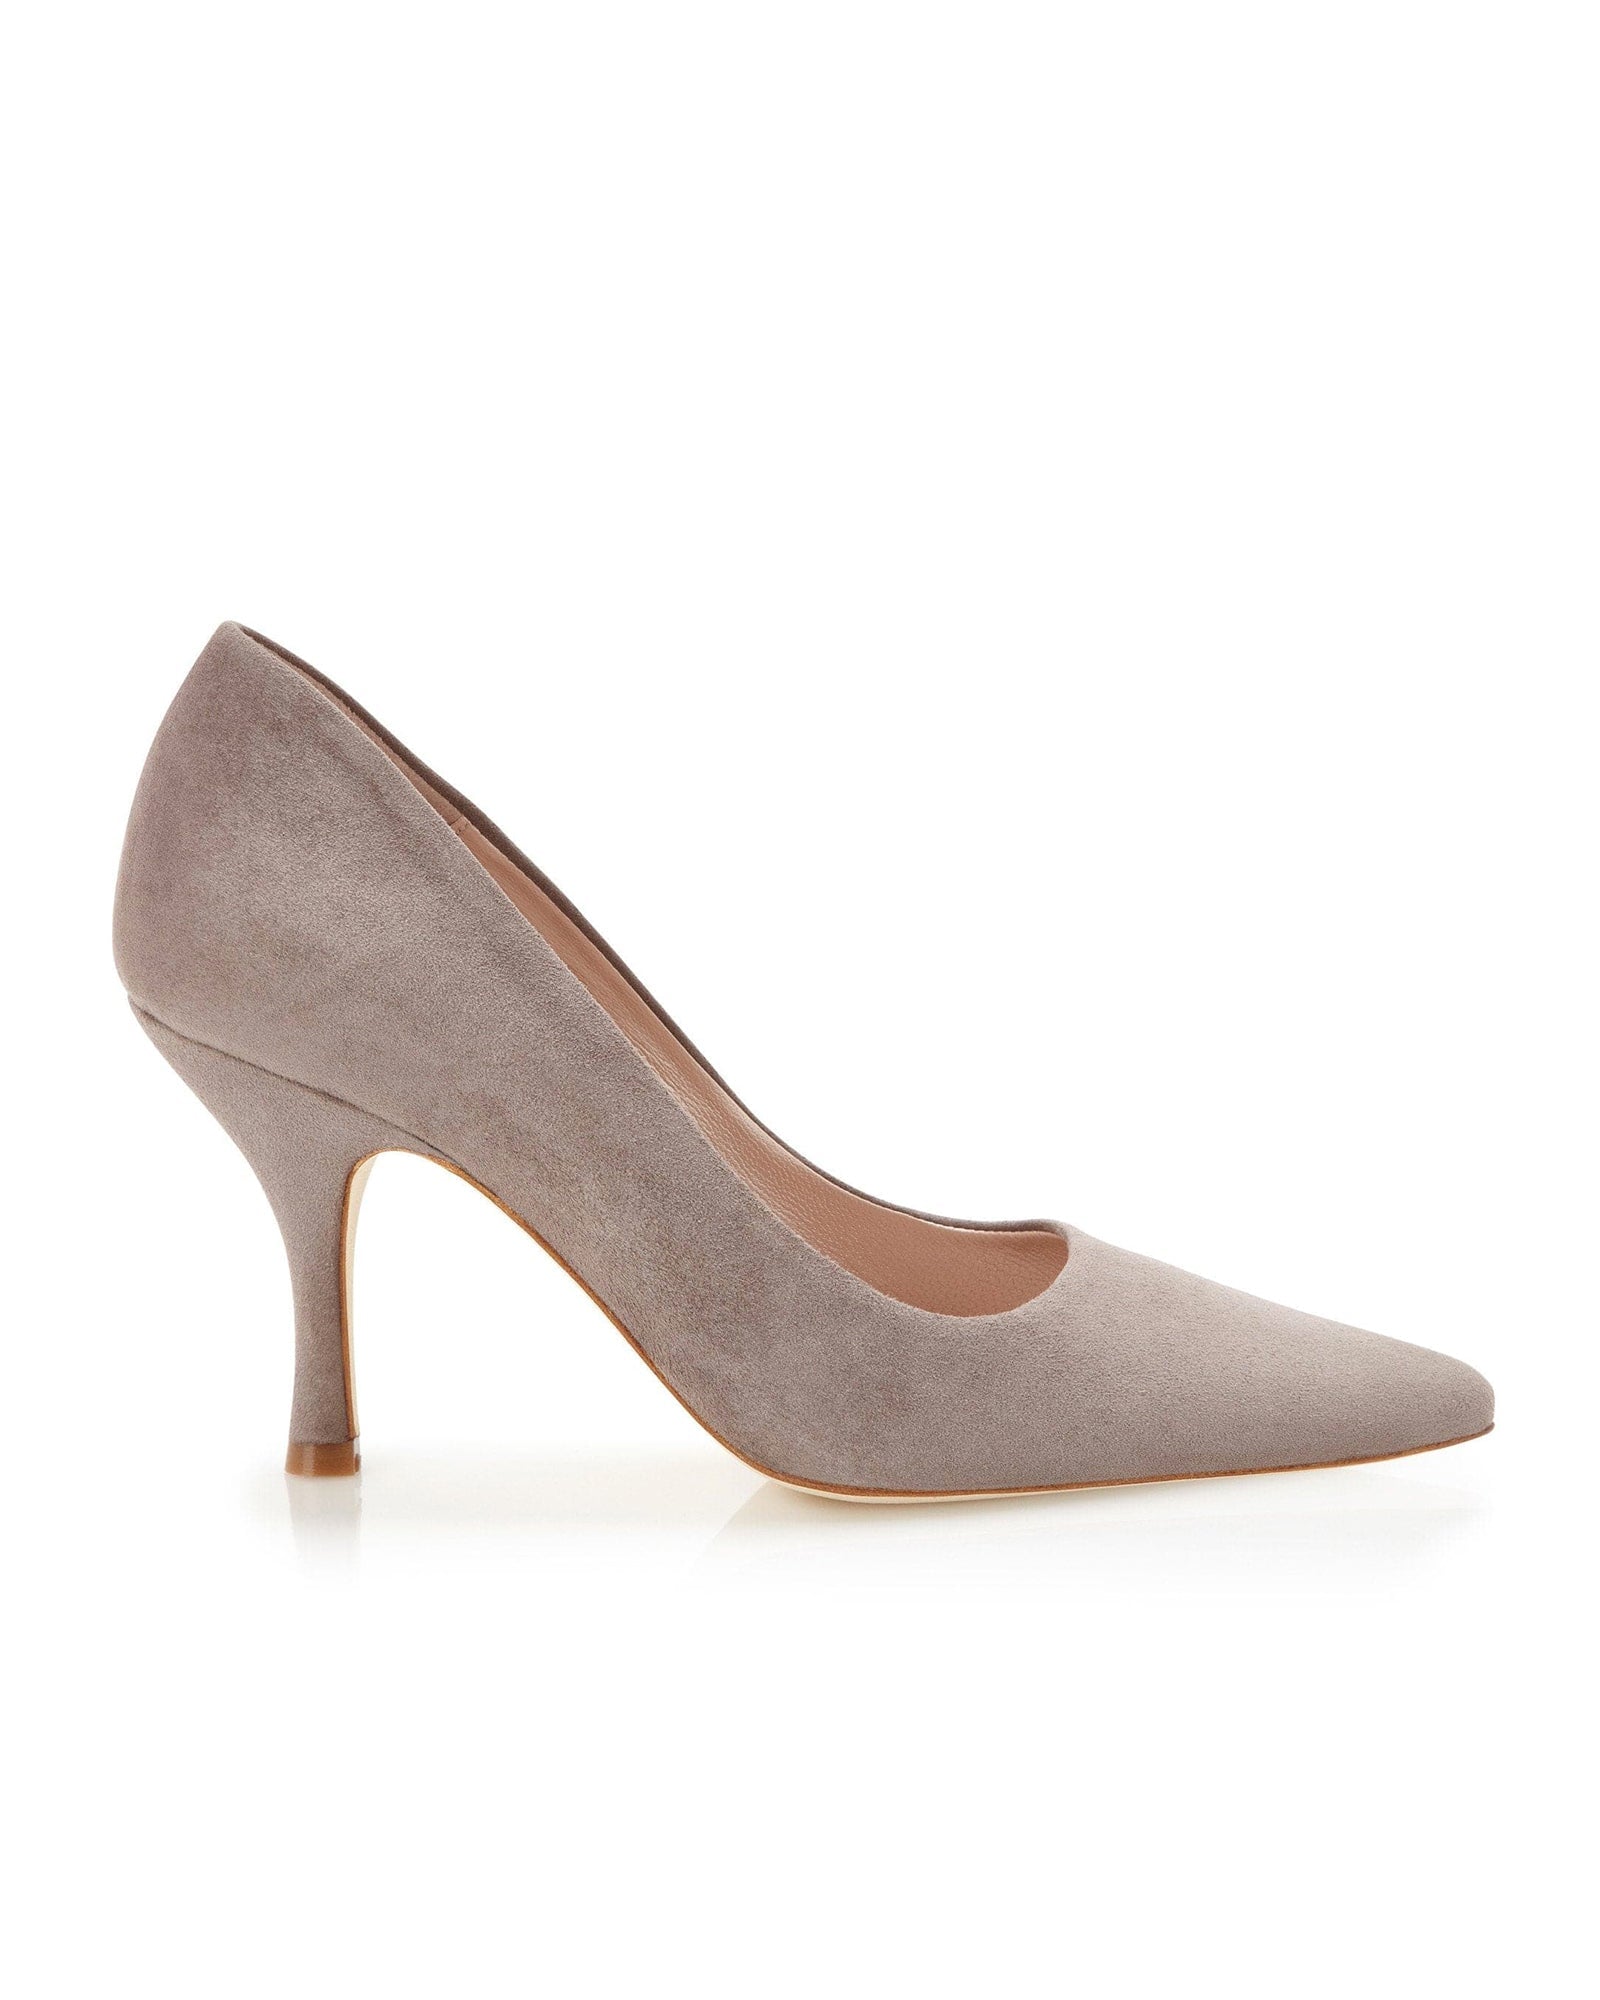 Olivia Cinder Fashion Shoe Grey Suede Court Shoes  image